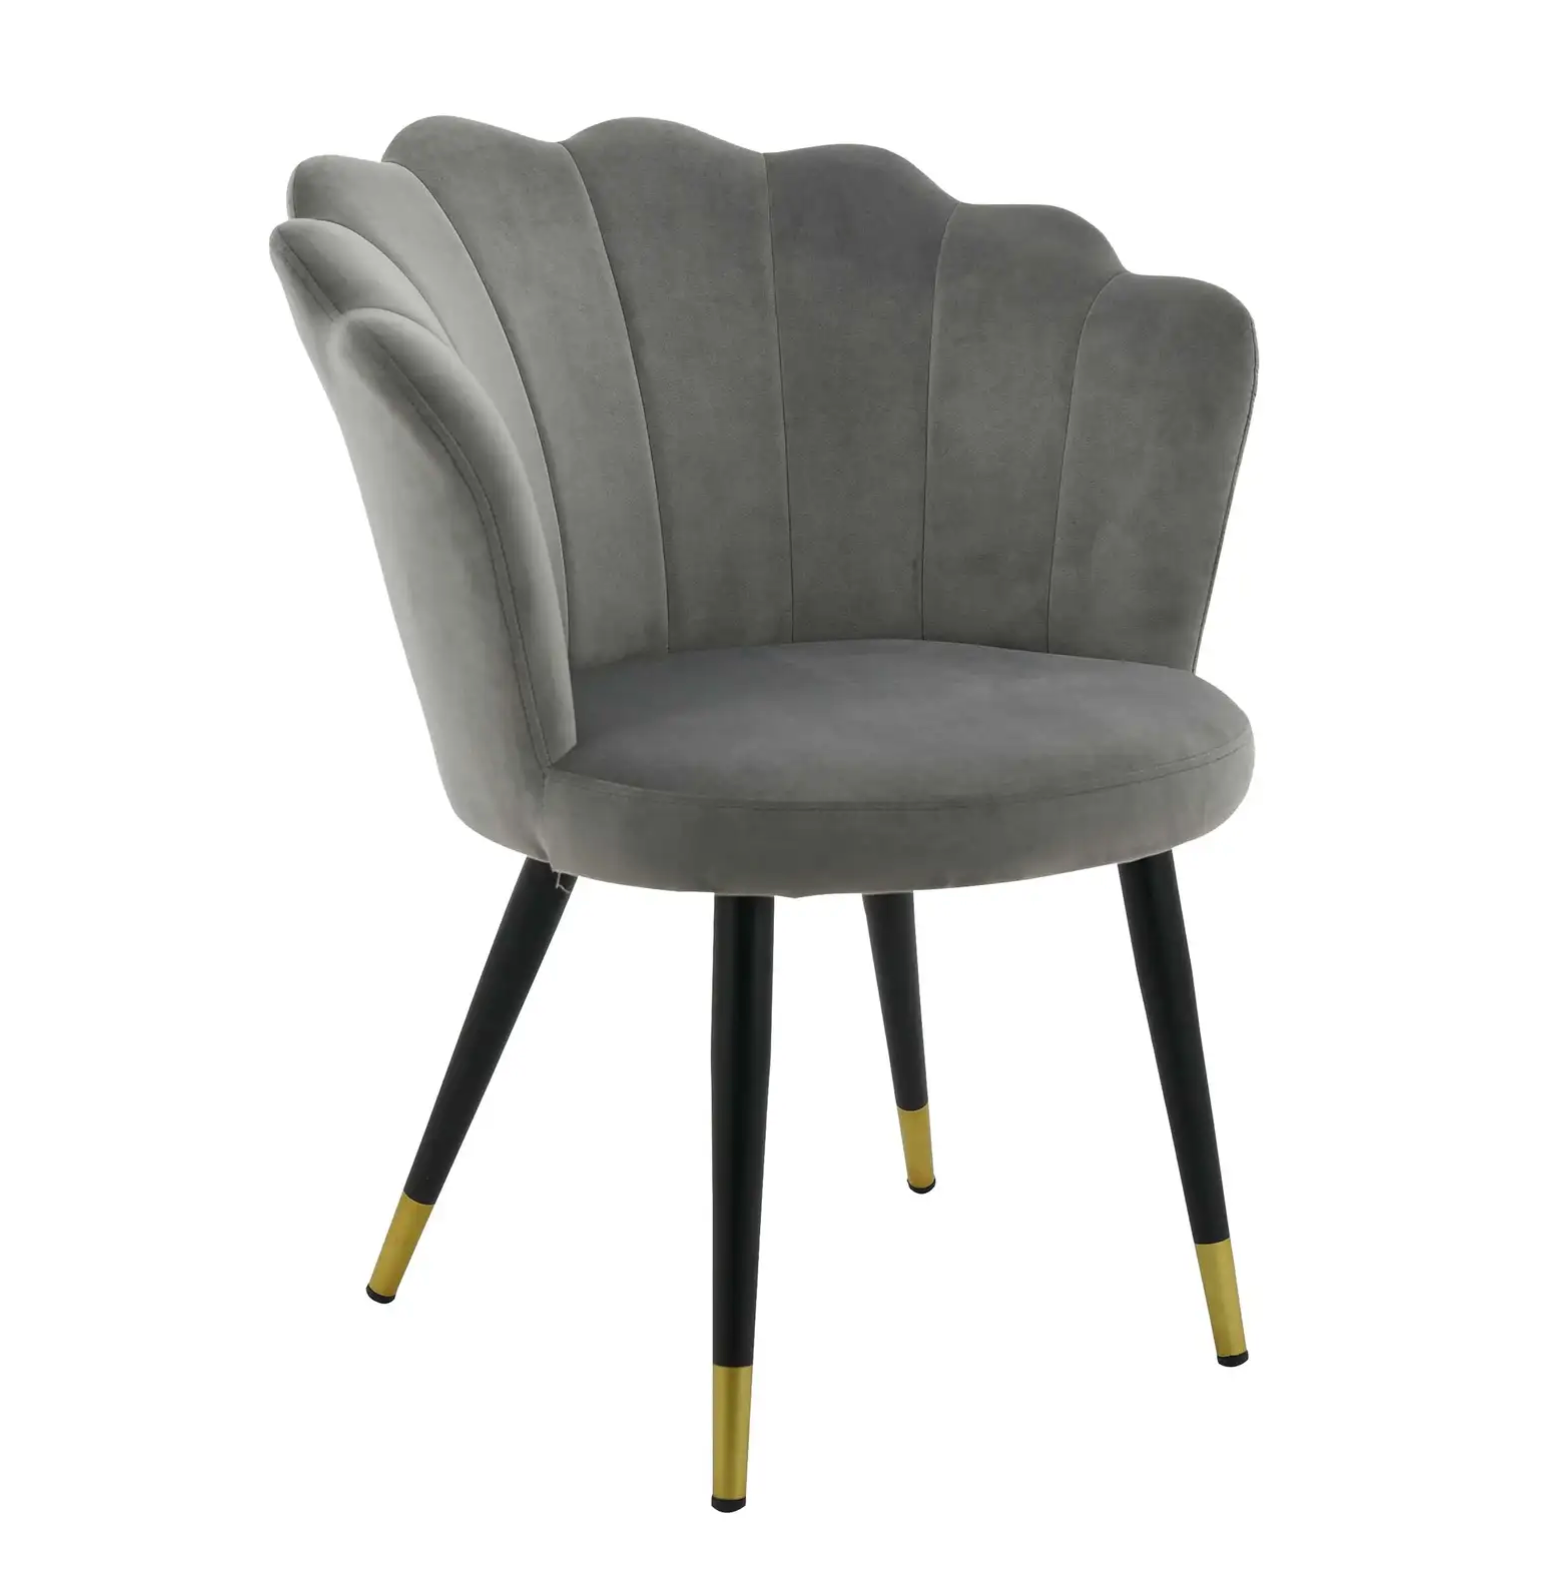 Gray velor dining chair 68.5 x 67.5 x 46.5 cm